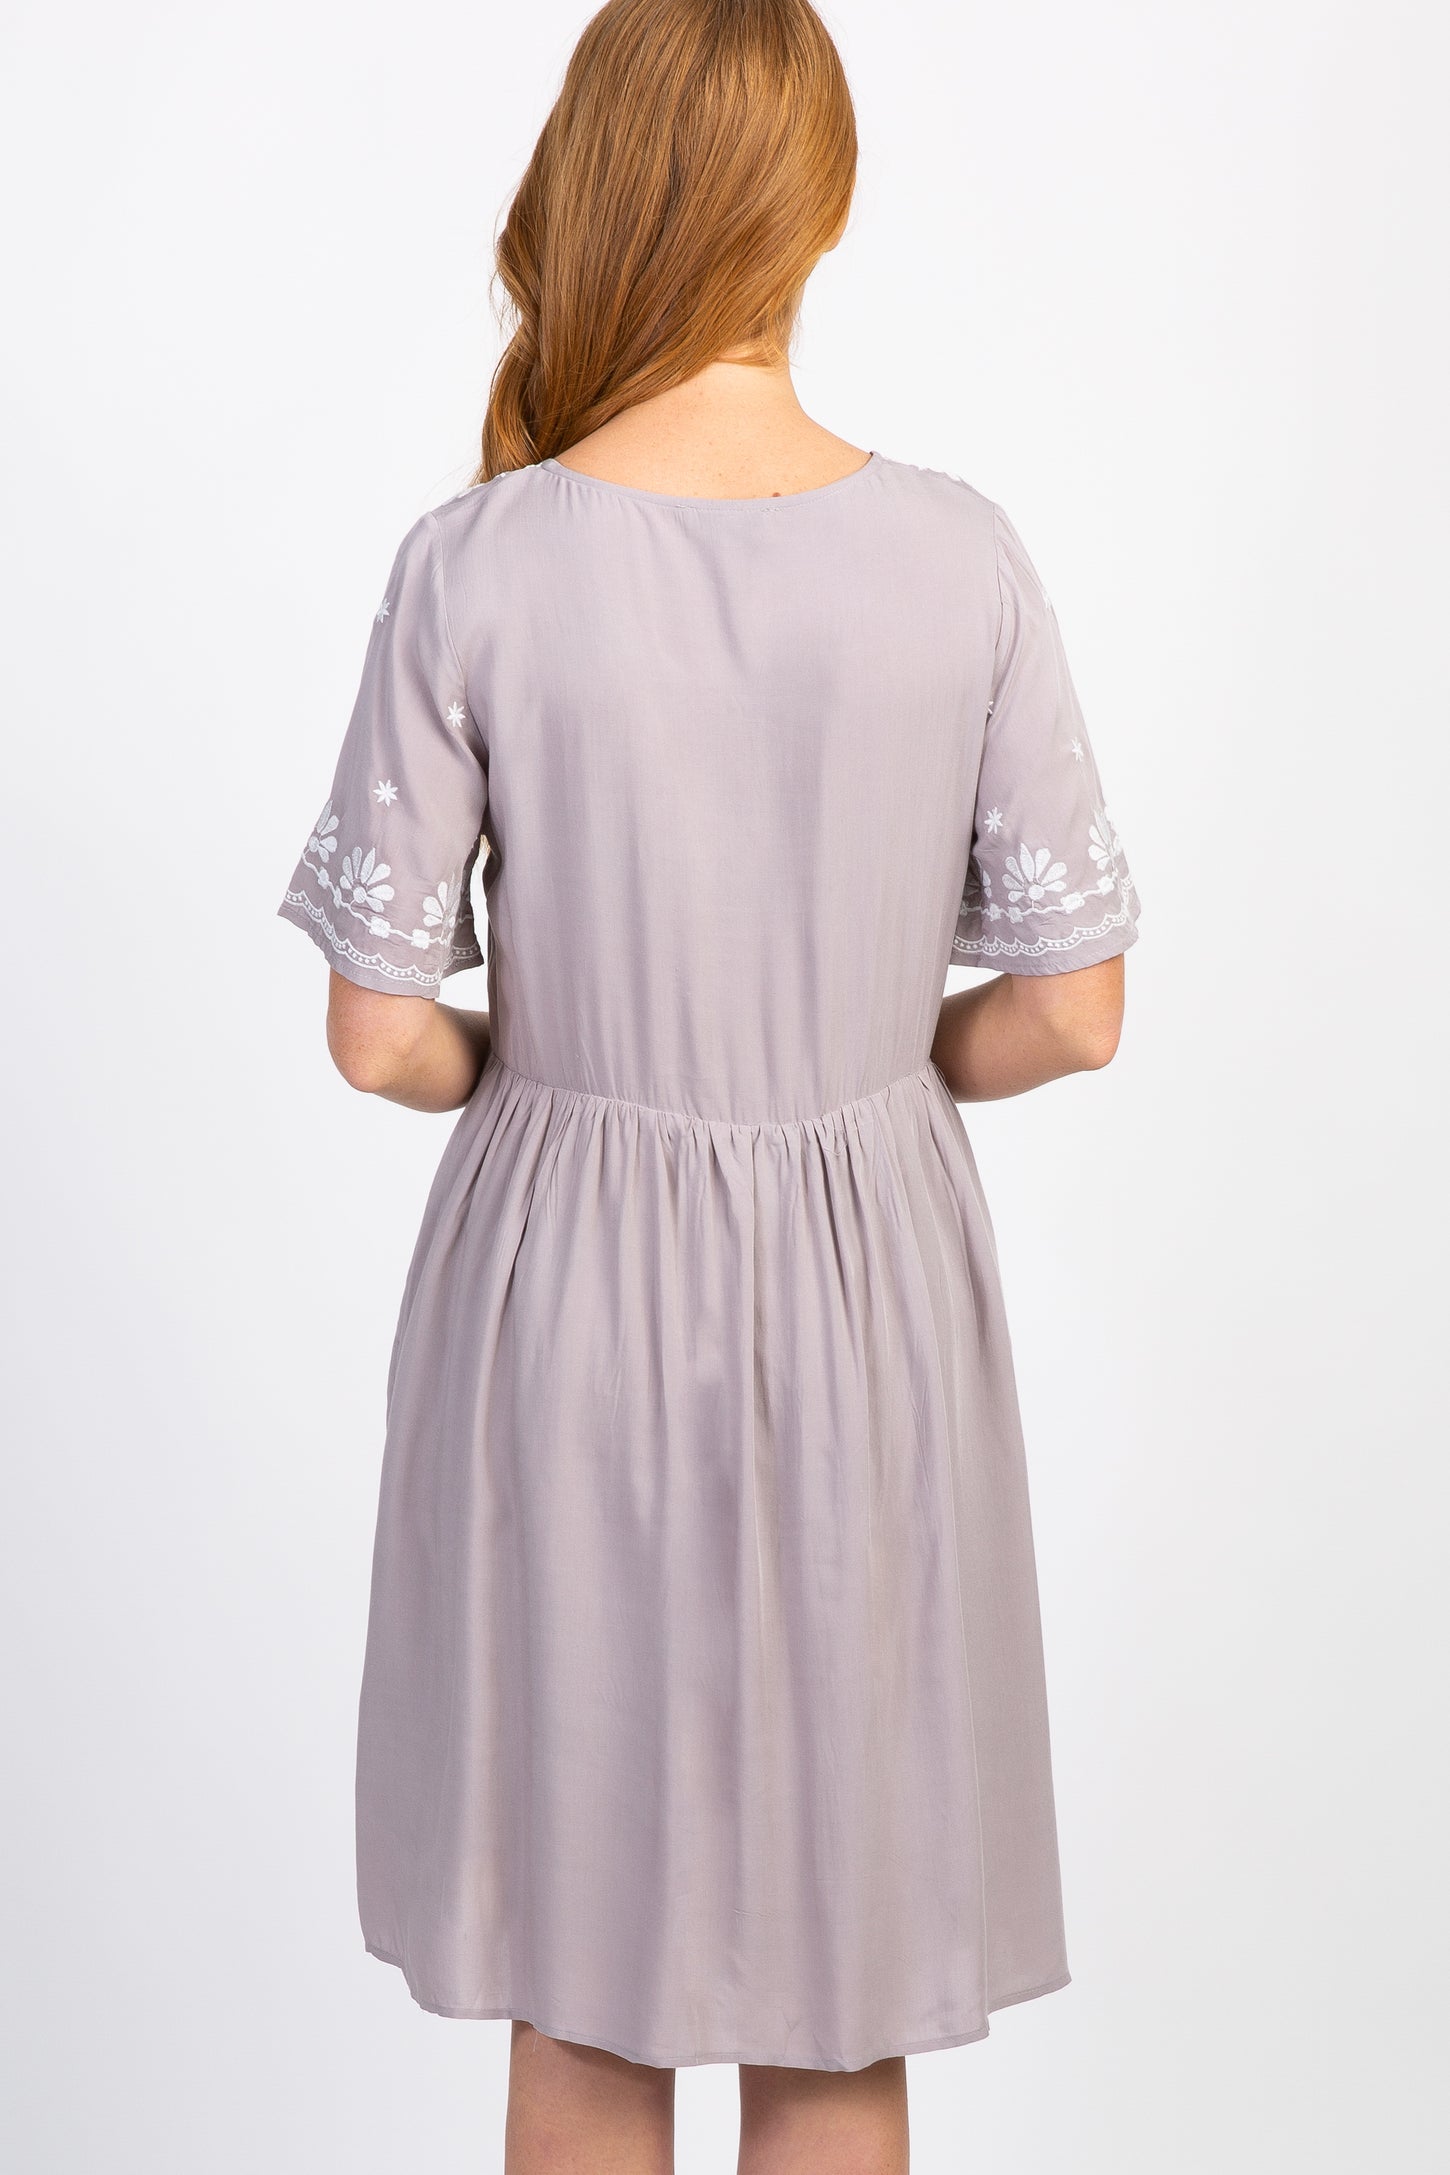 Grey Embroidered Short Sleeve Peplum Dress